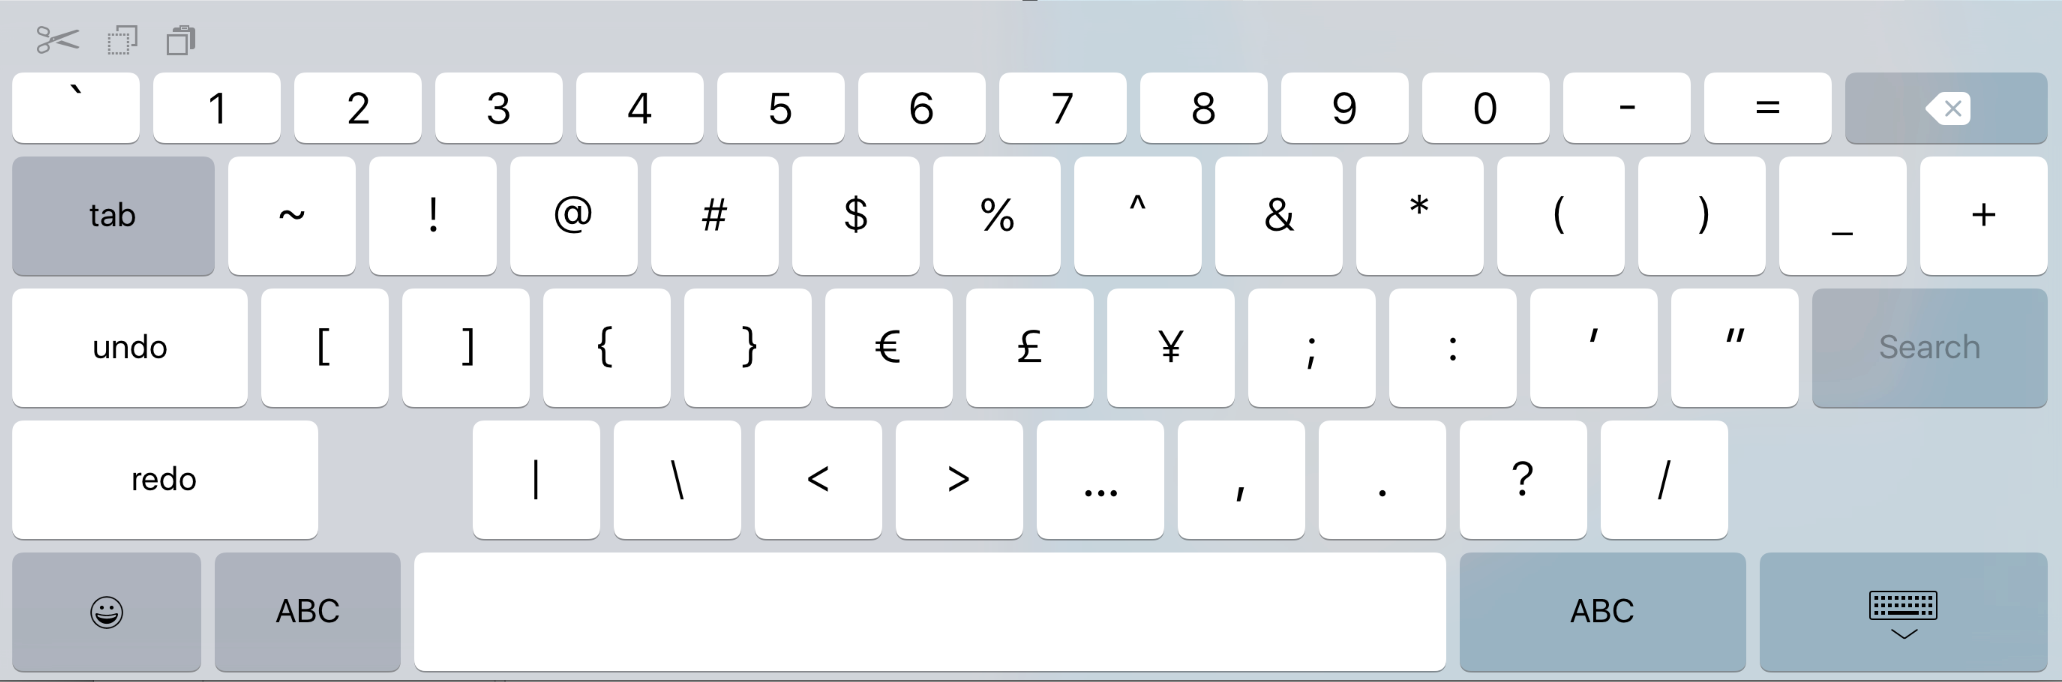 Ios 9 Ipad Keyboard Adds Keys Symbols At Bigger Screen Resolutions Seemingly Ready For Ipad Pro Update 9to5mac